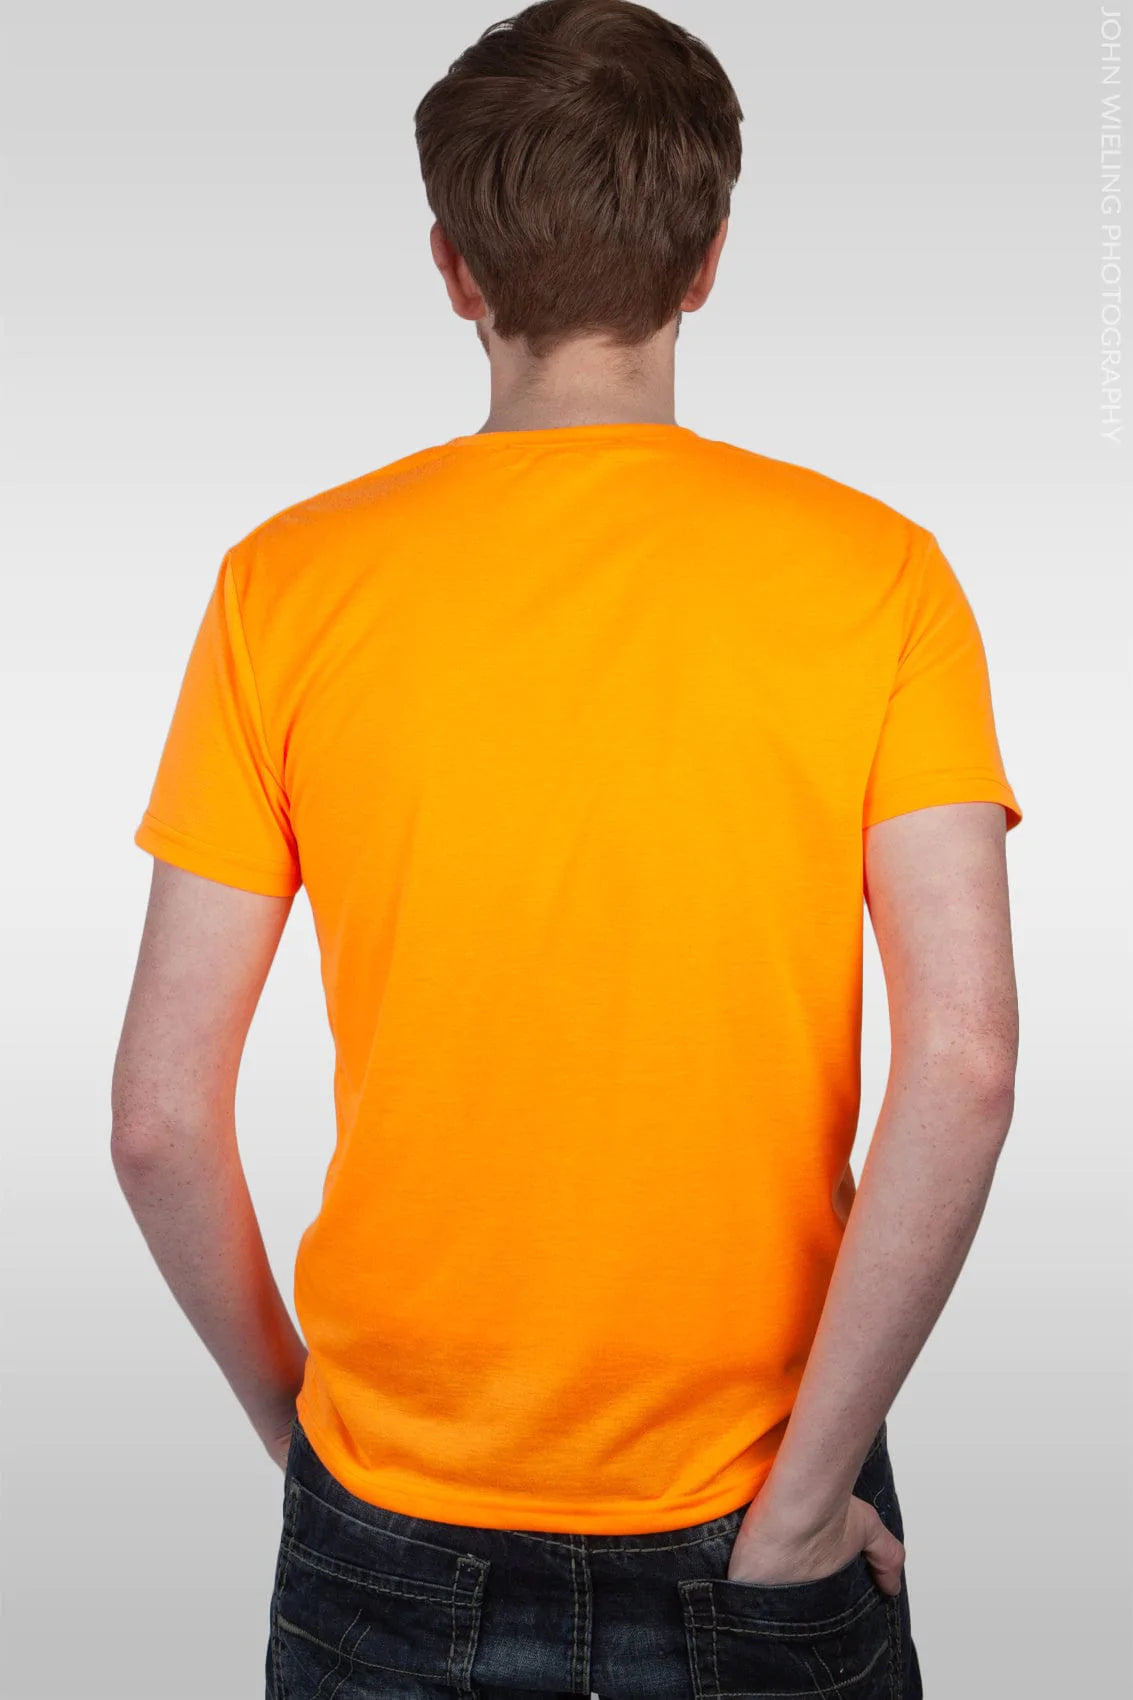 Top Gun ® T-shirt orange - Stateshop Fashion